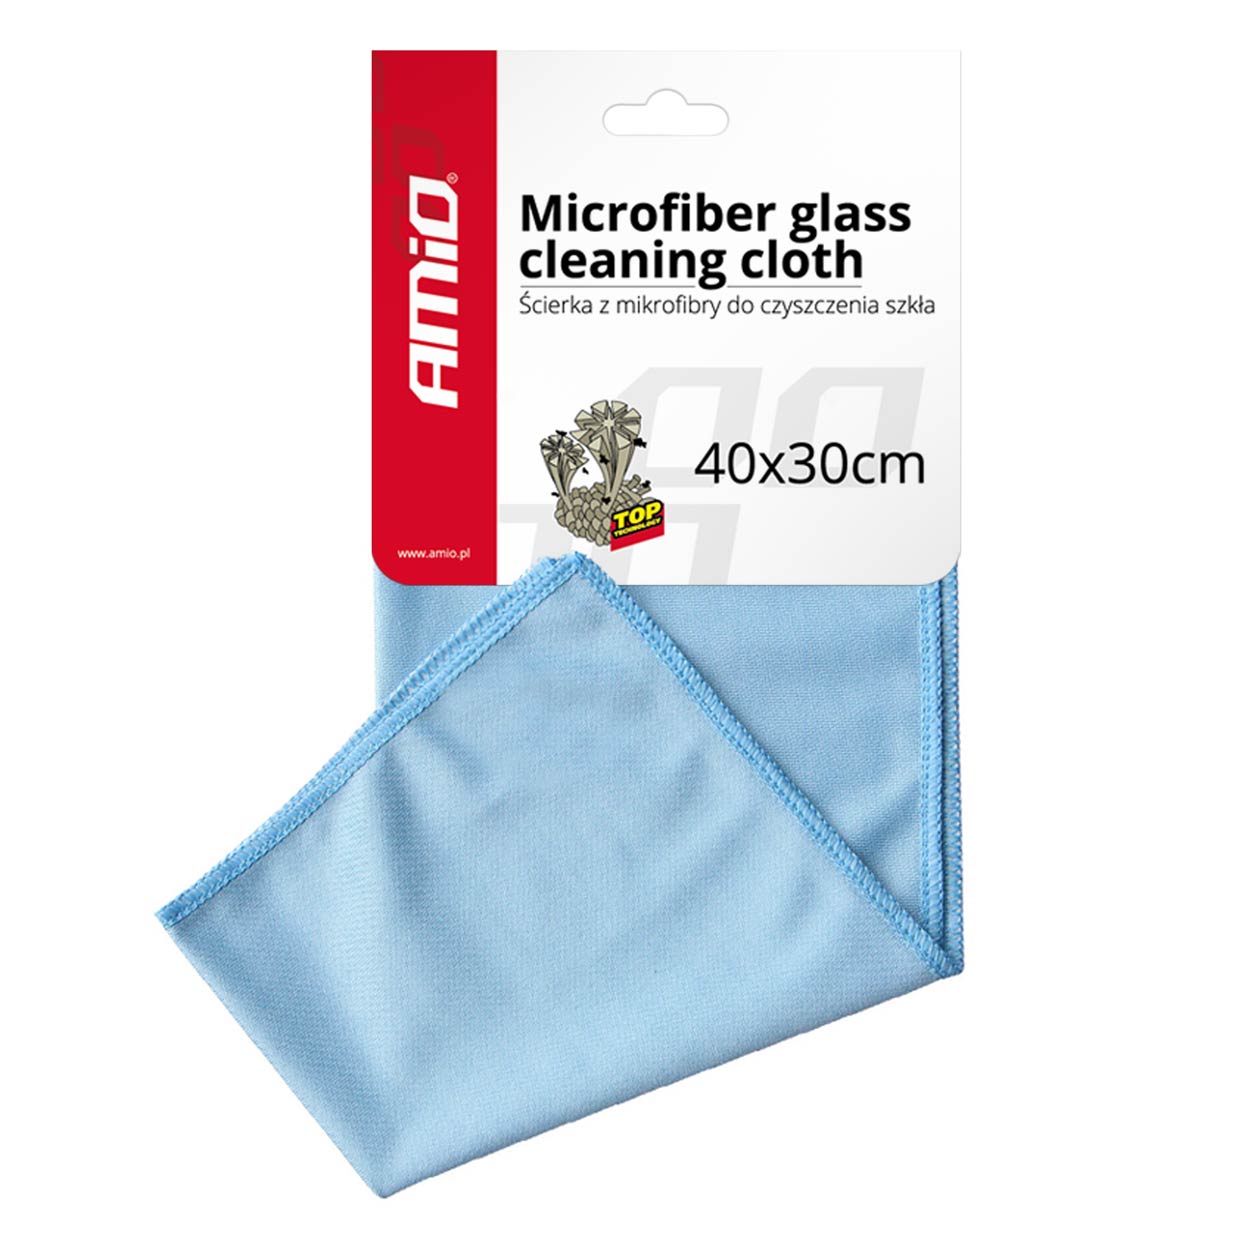 Mikrofiber rengjøringsklut for glass - spo-cs-disabled - spo-default - spo-disabled - spo-notify-me-disabled